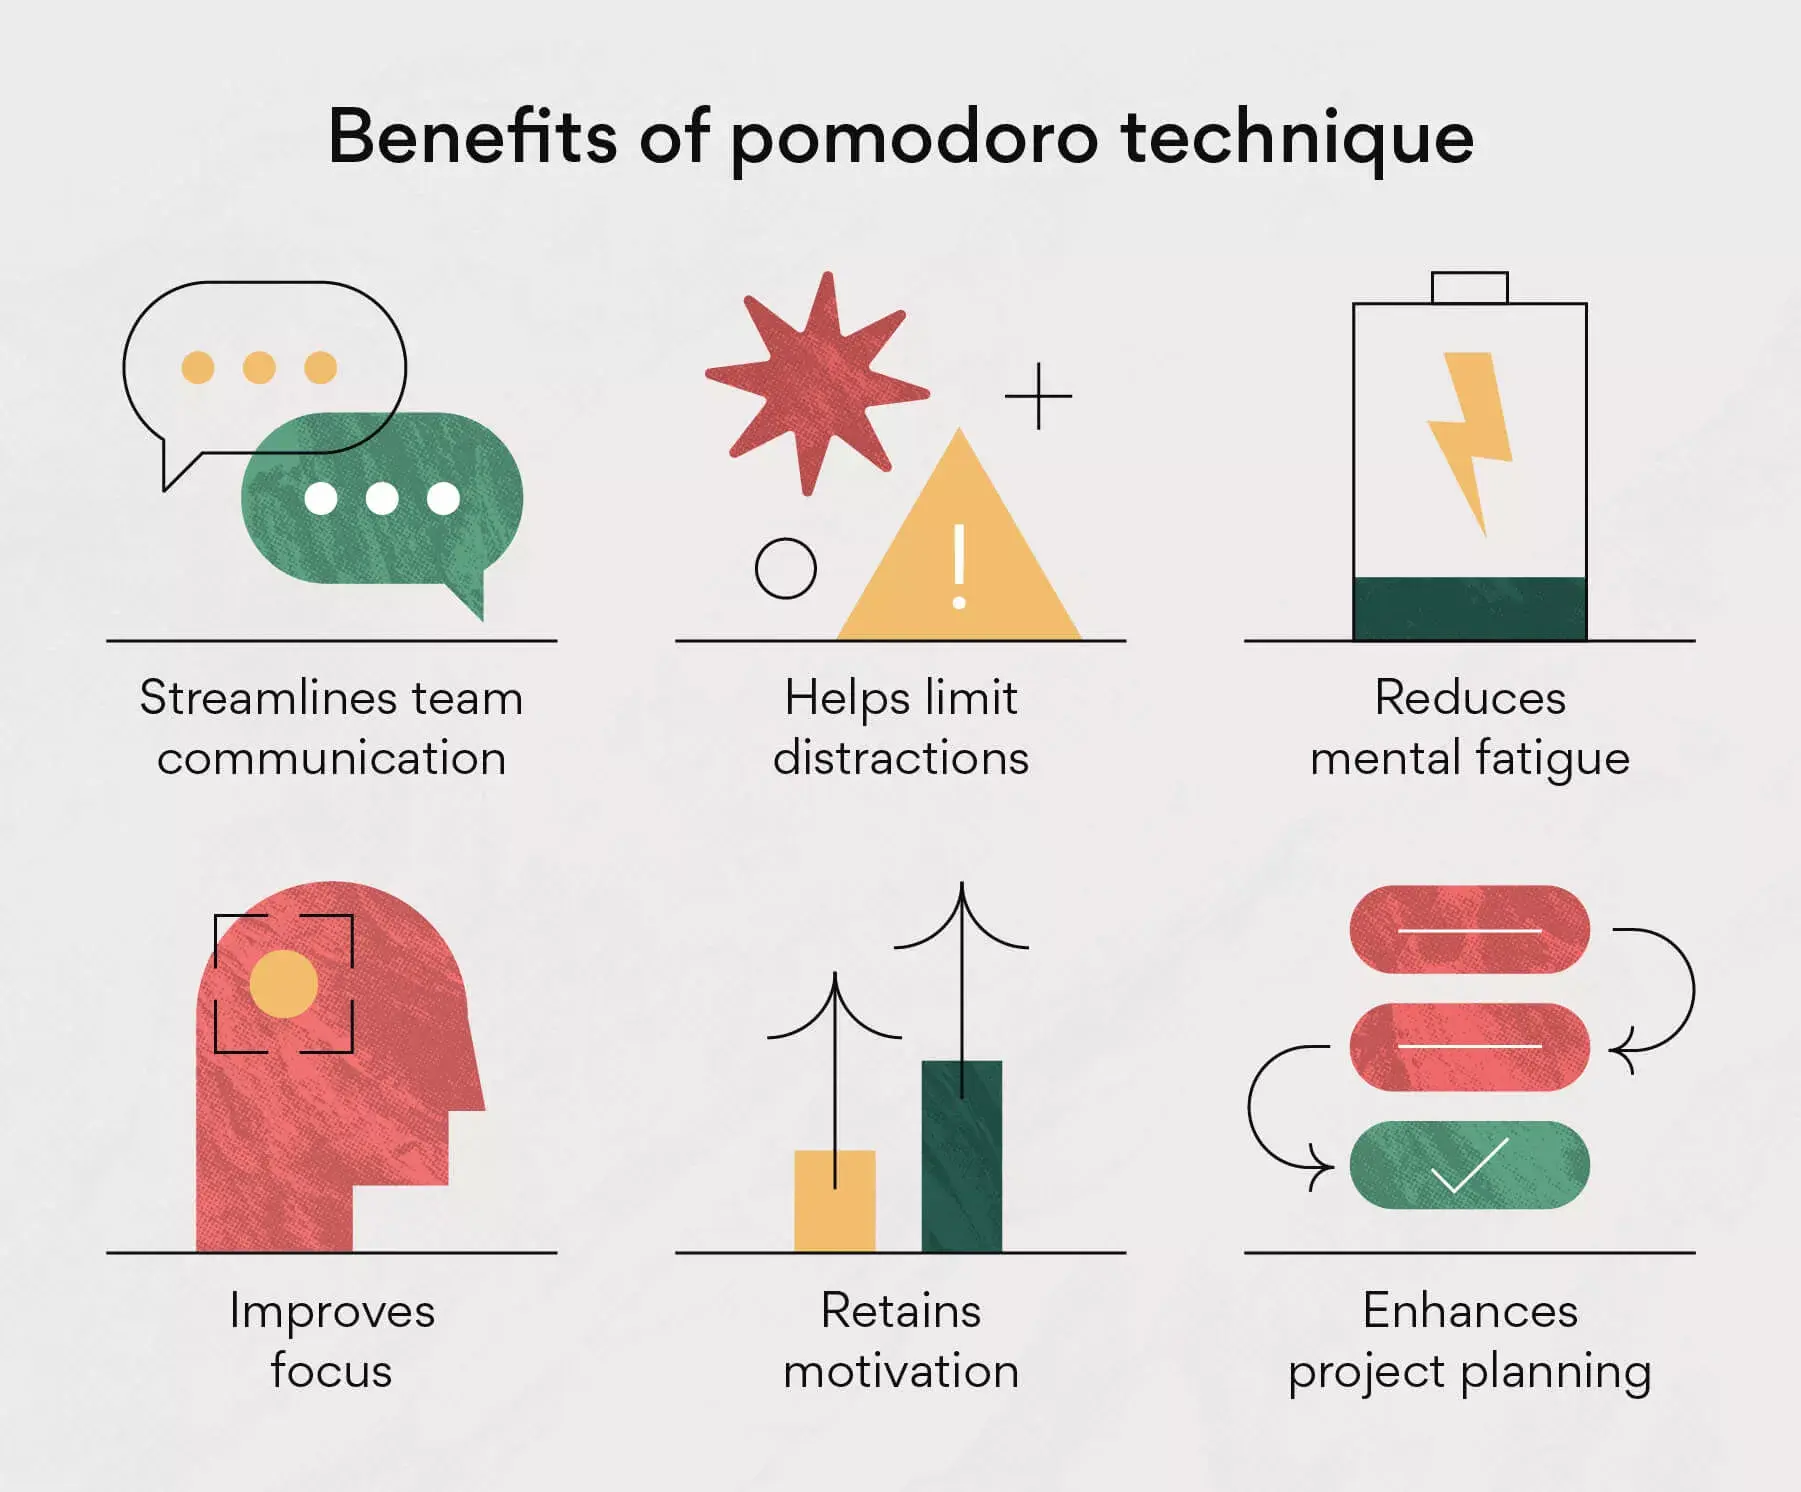 Benefits of the pomodoro technique